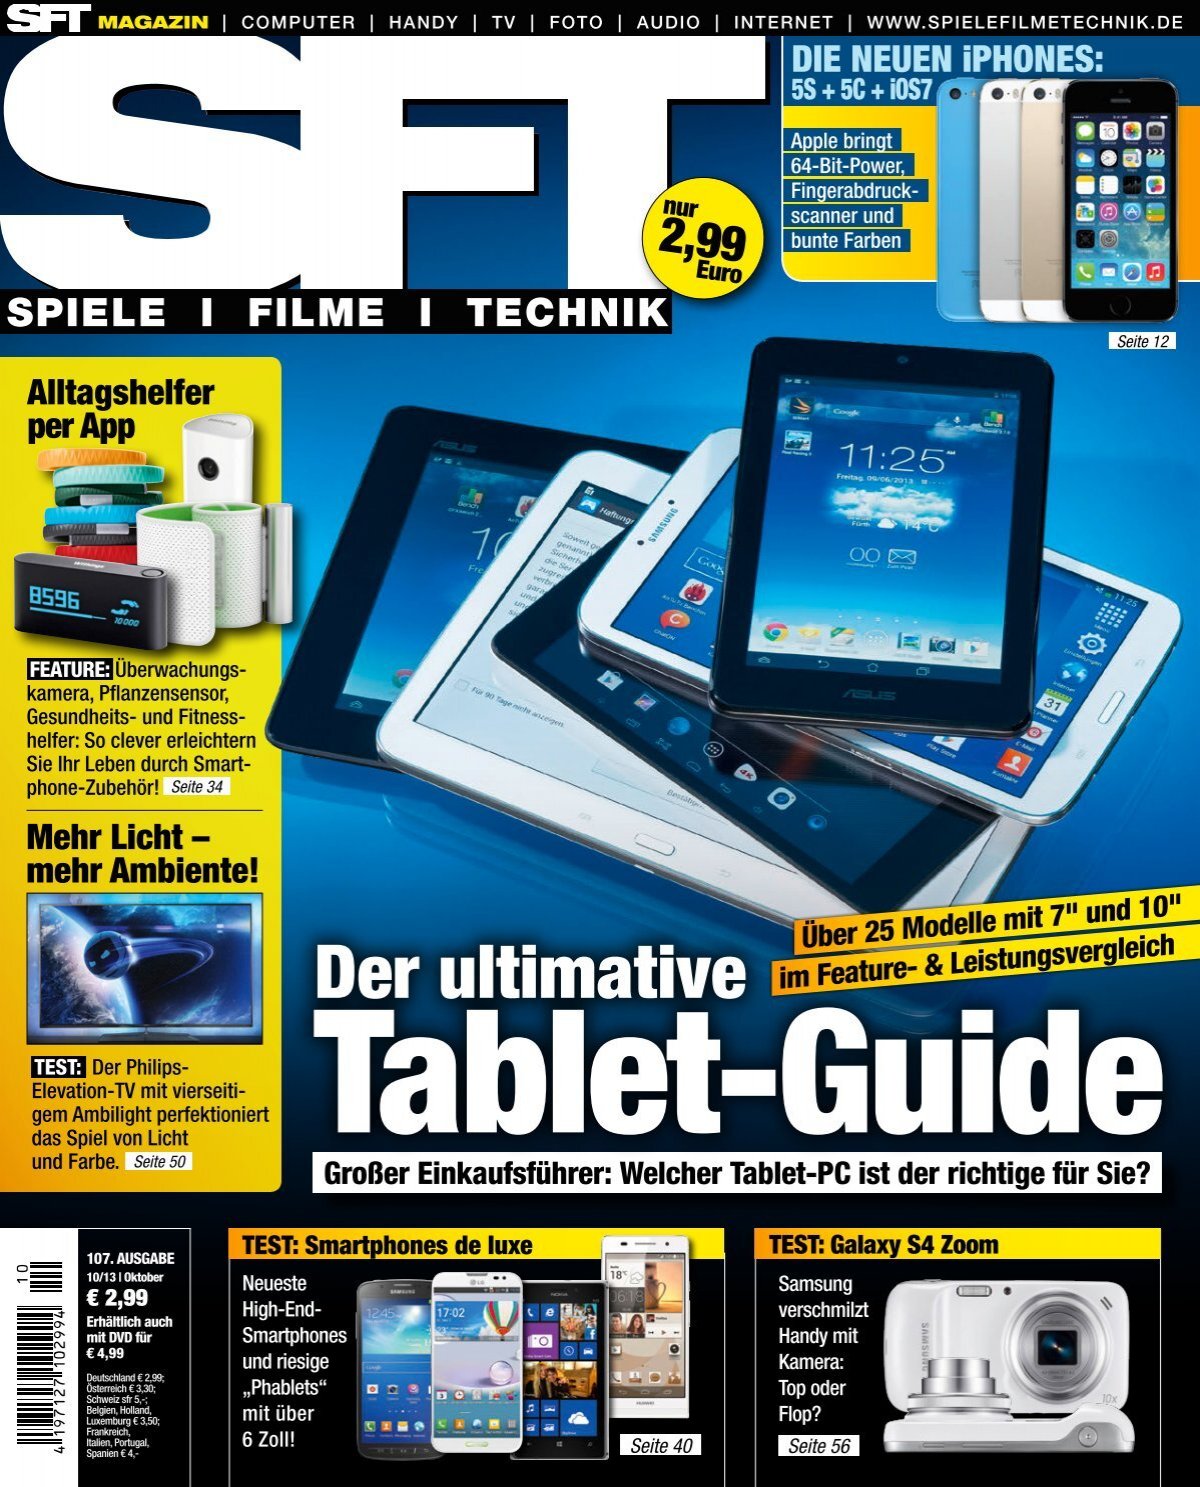 SFT – Spiele Filme Technik - Magazin Der ultimative Tablet-Guide (Vorschau)